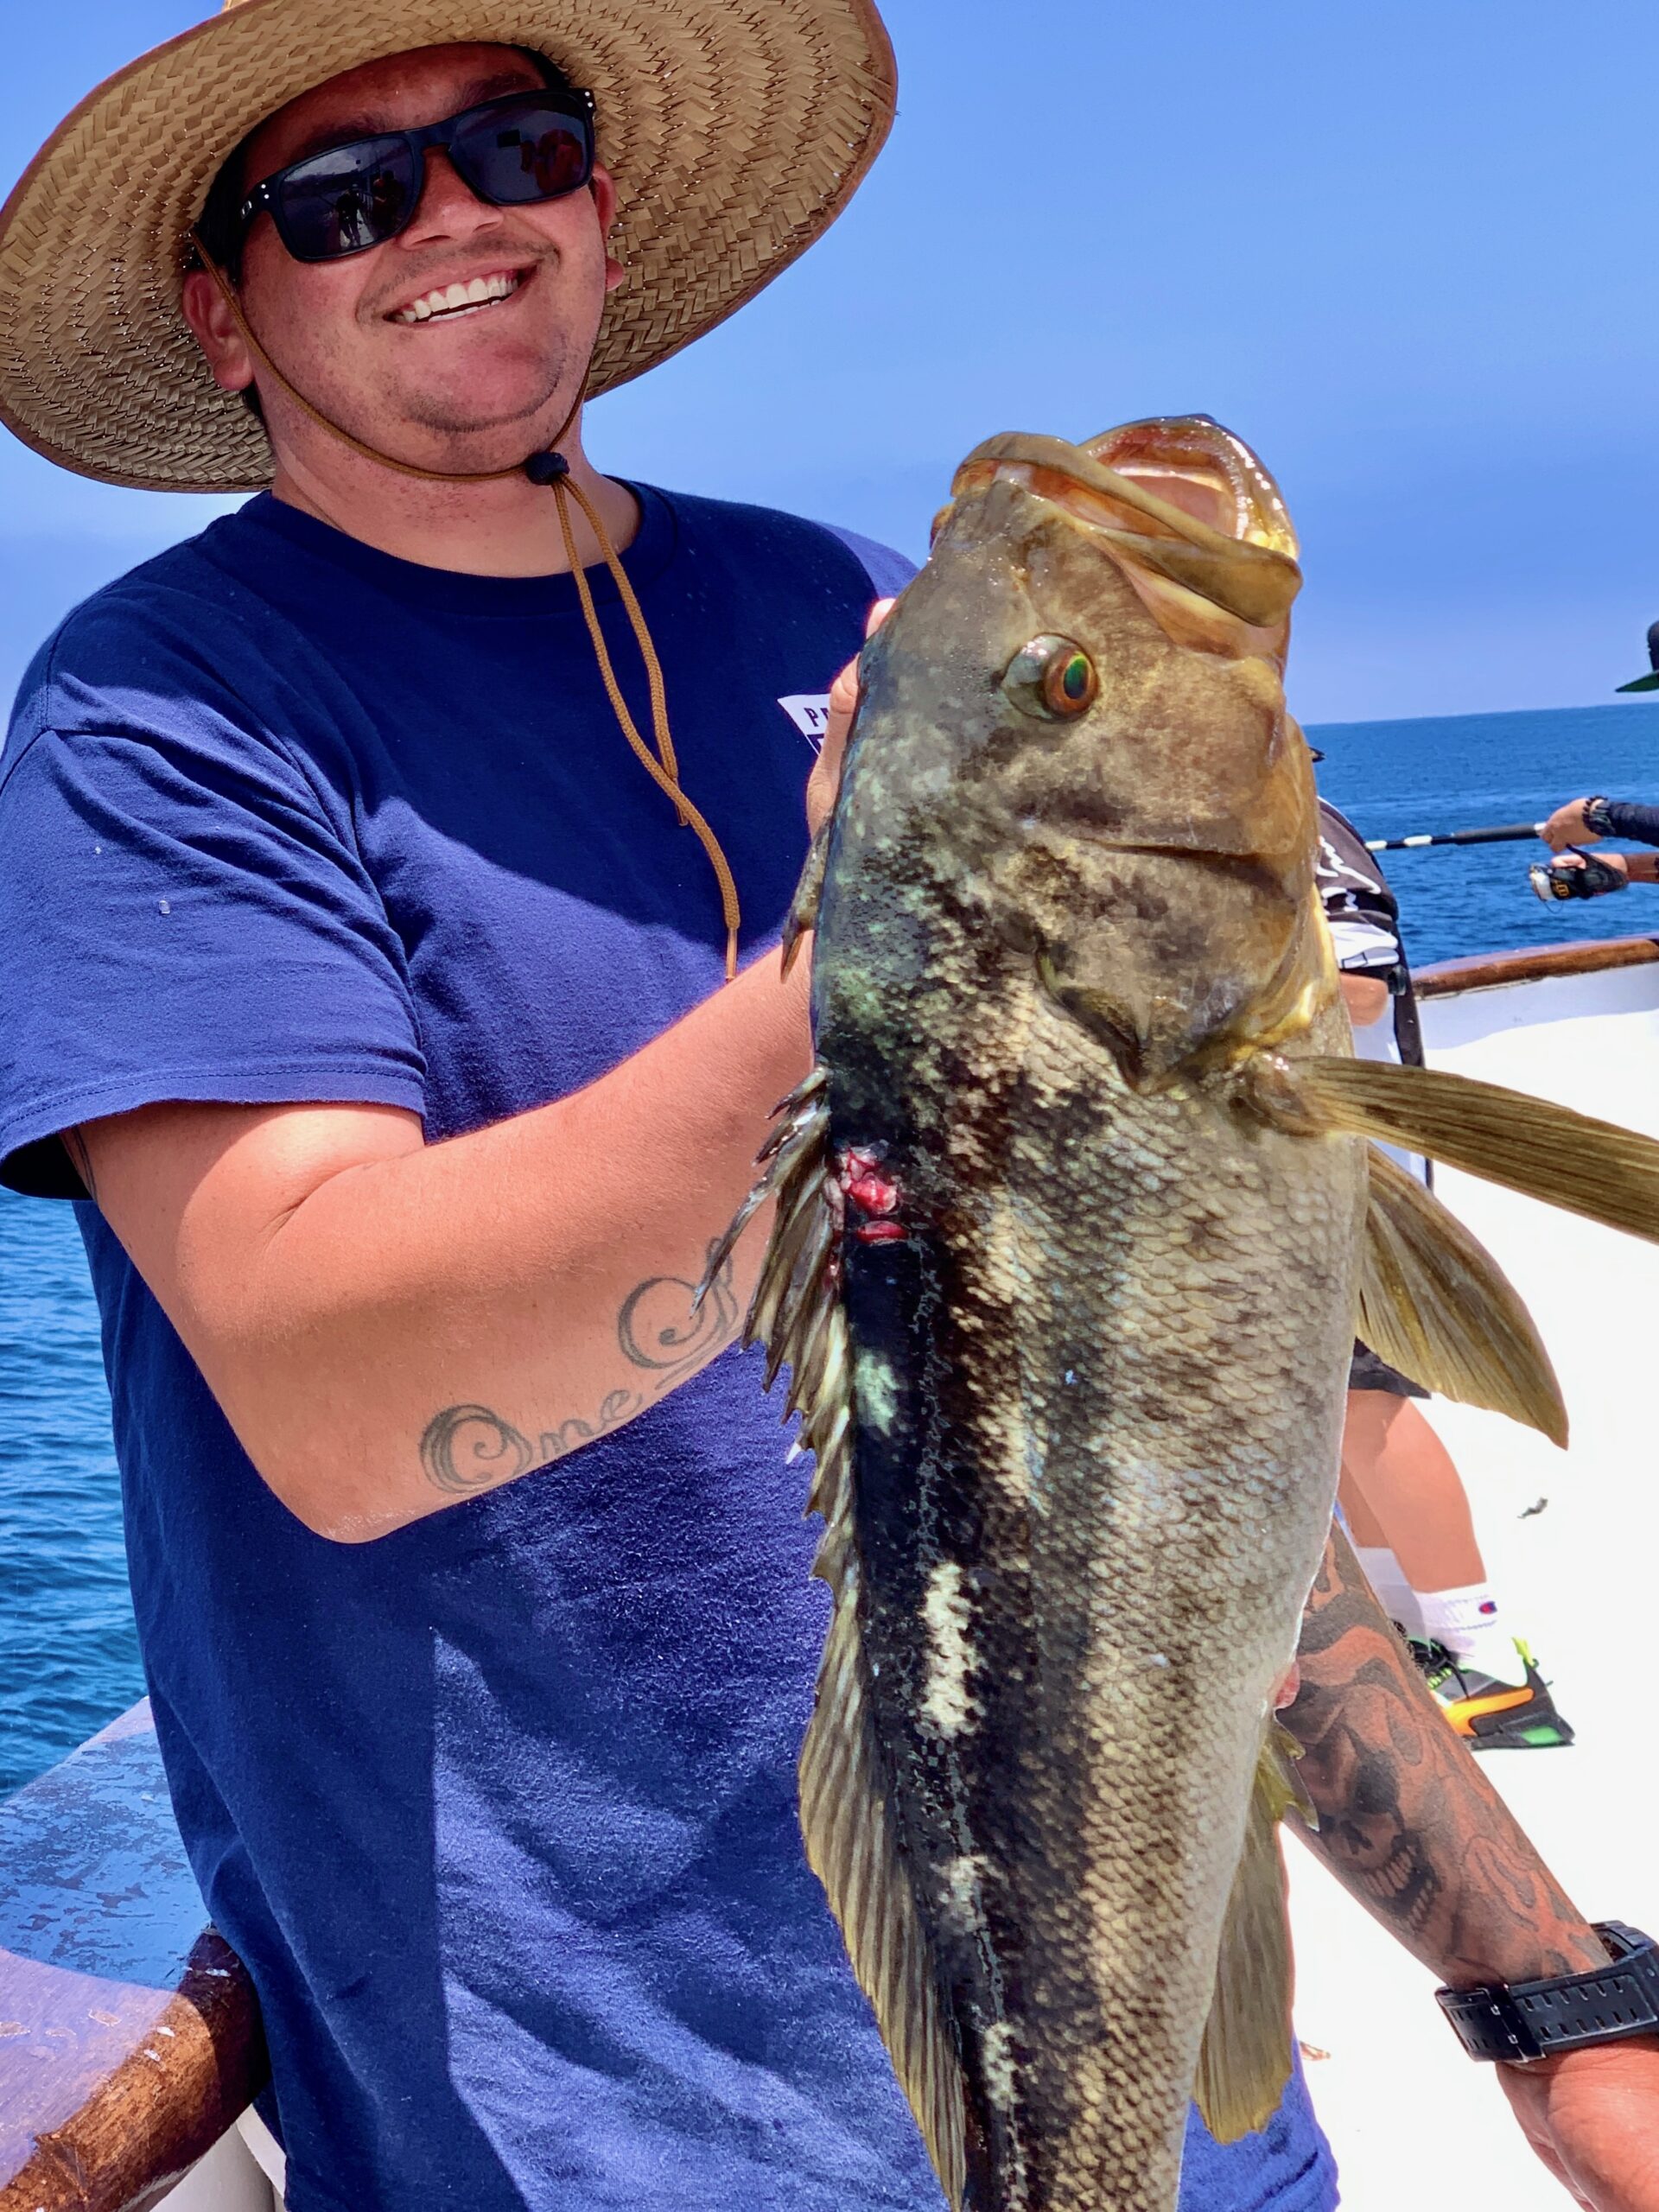 Calico bass fishing – how to establish patterns